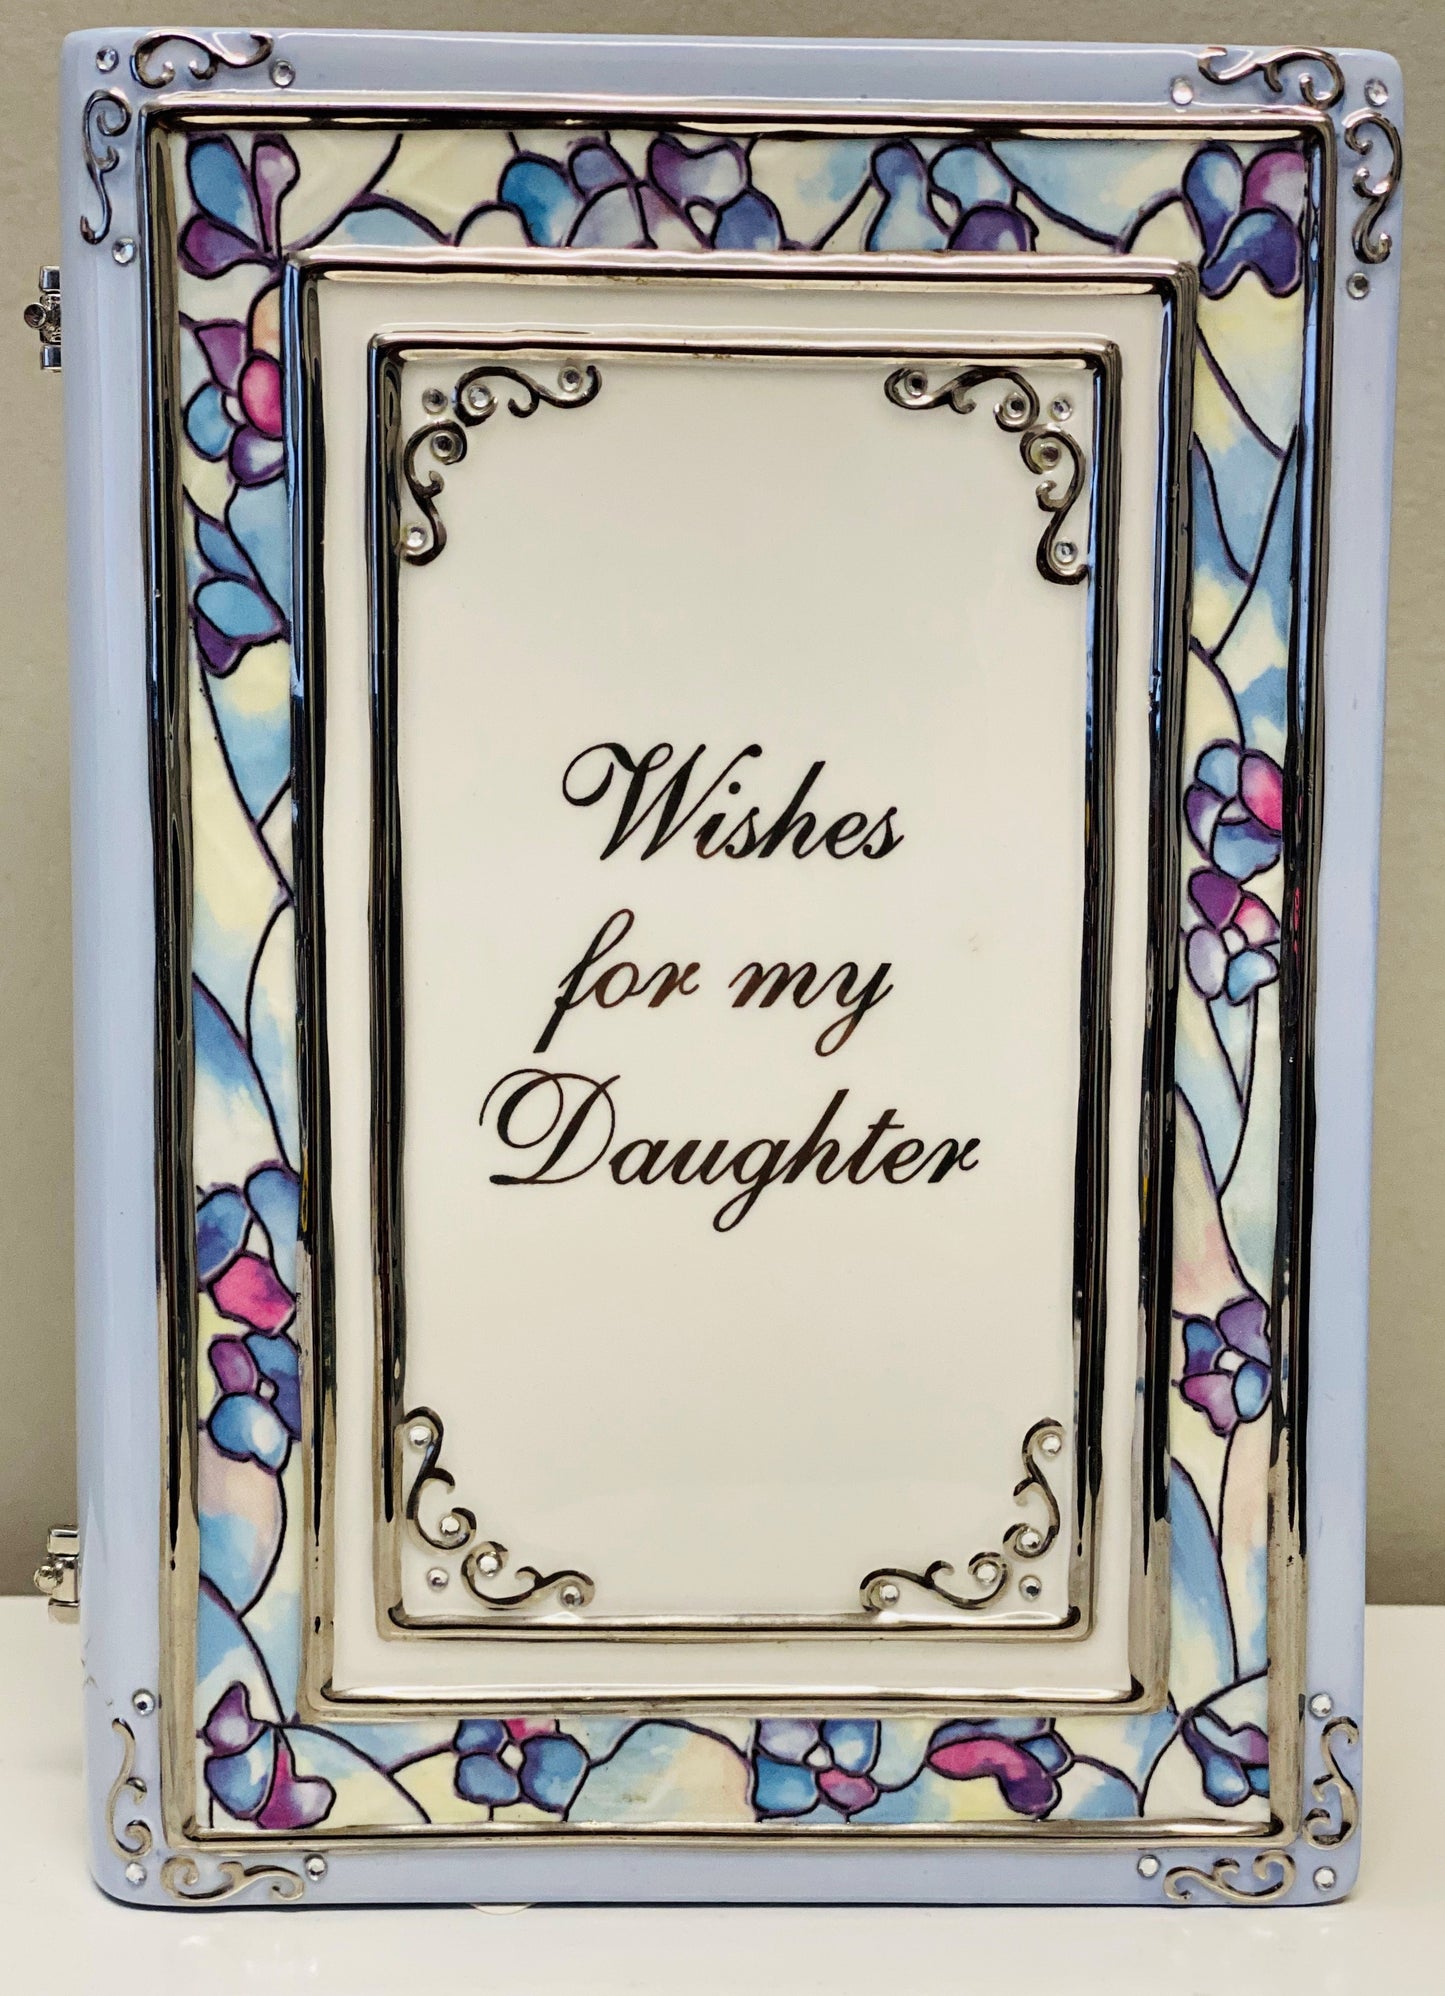 Ardleigh Elliott "Wishes for my Daughter" Heirloom Porcelain Musical Book